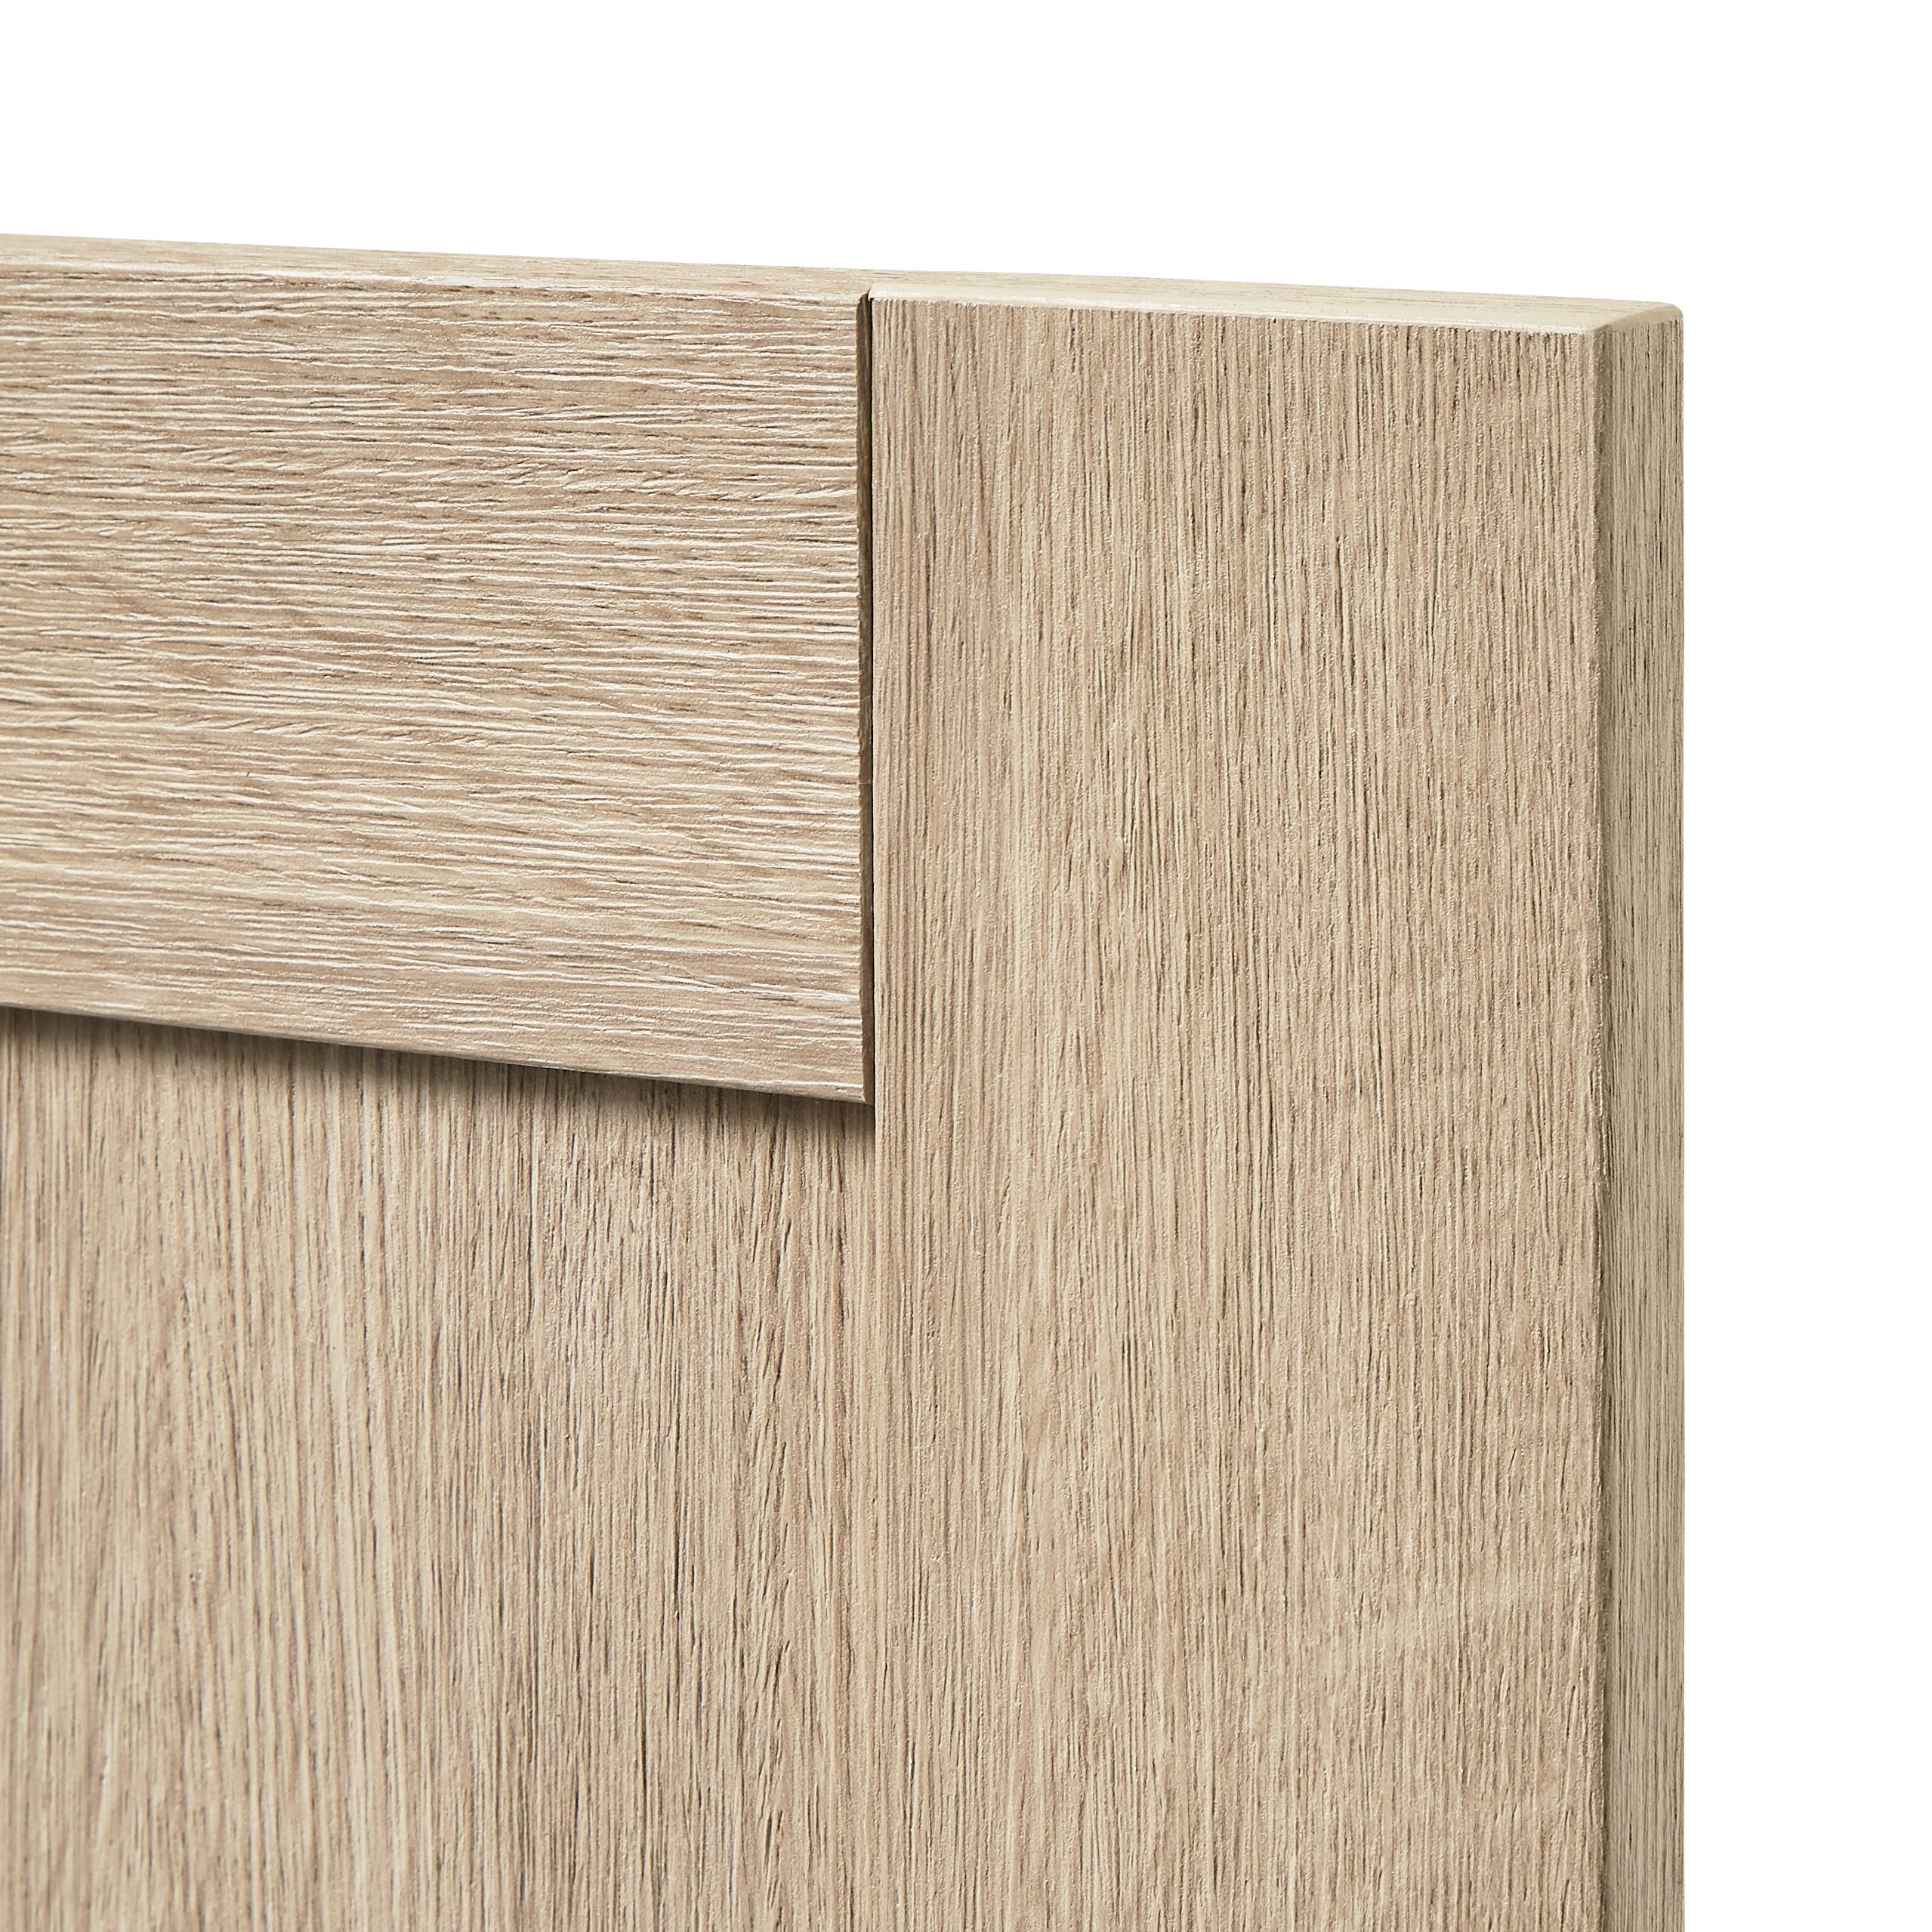 GoodHome Alpinia Oak effect shaker Tall wall Cabinet door (W)250mm (H)895mm (T)18mm